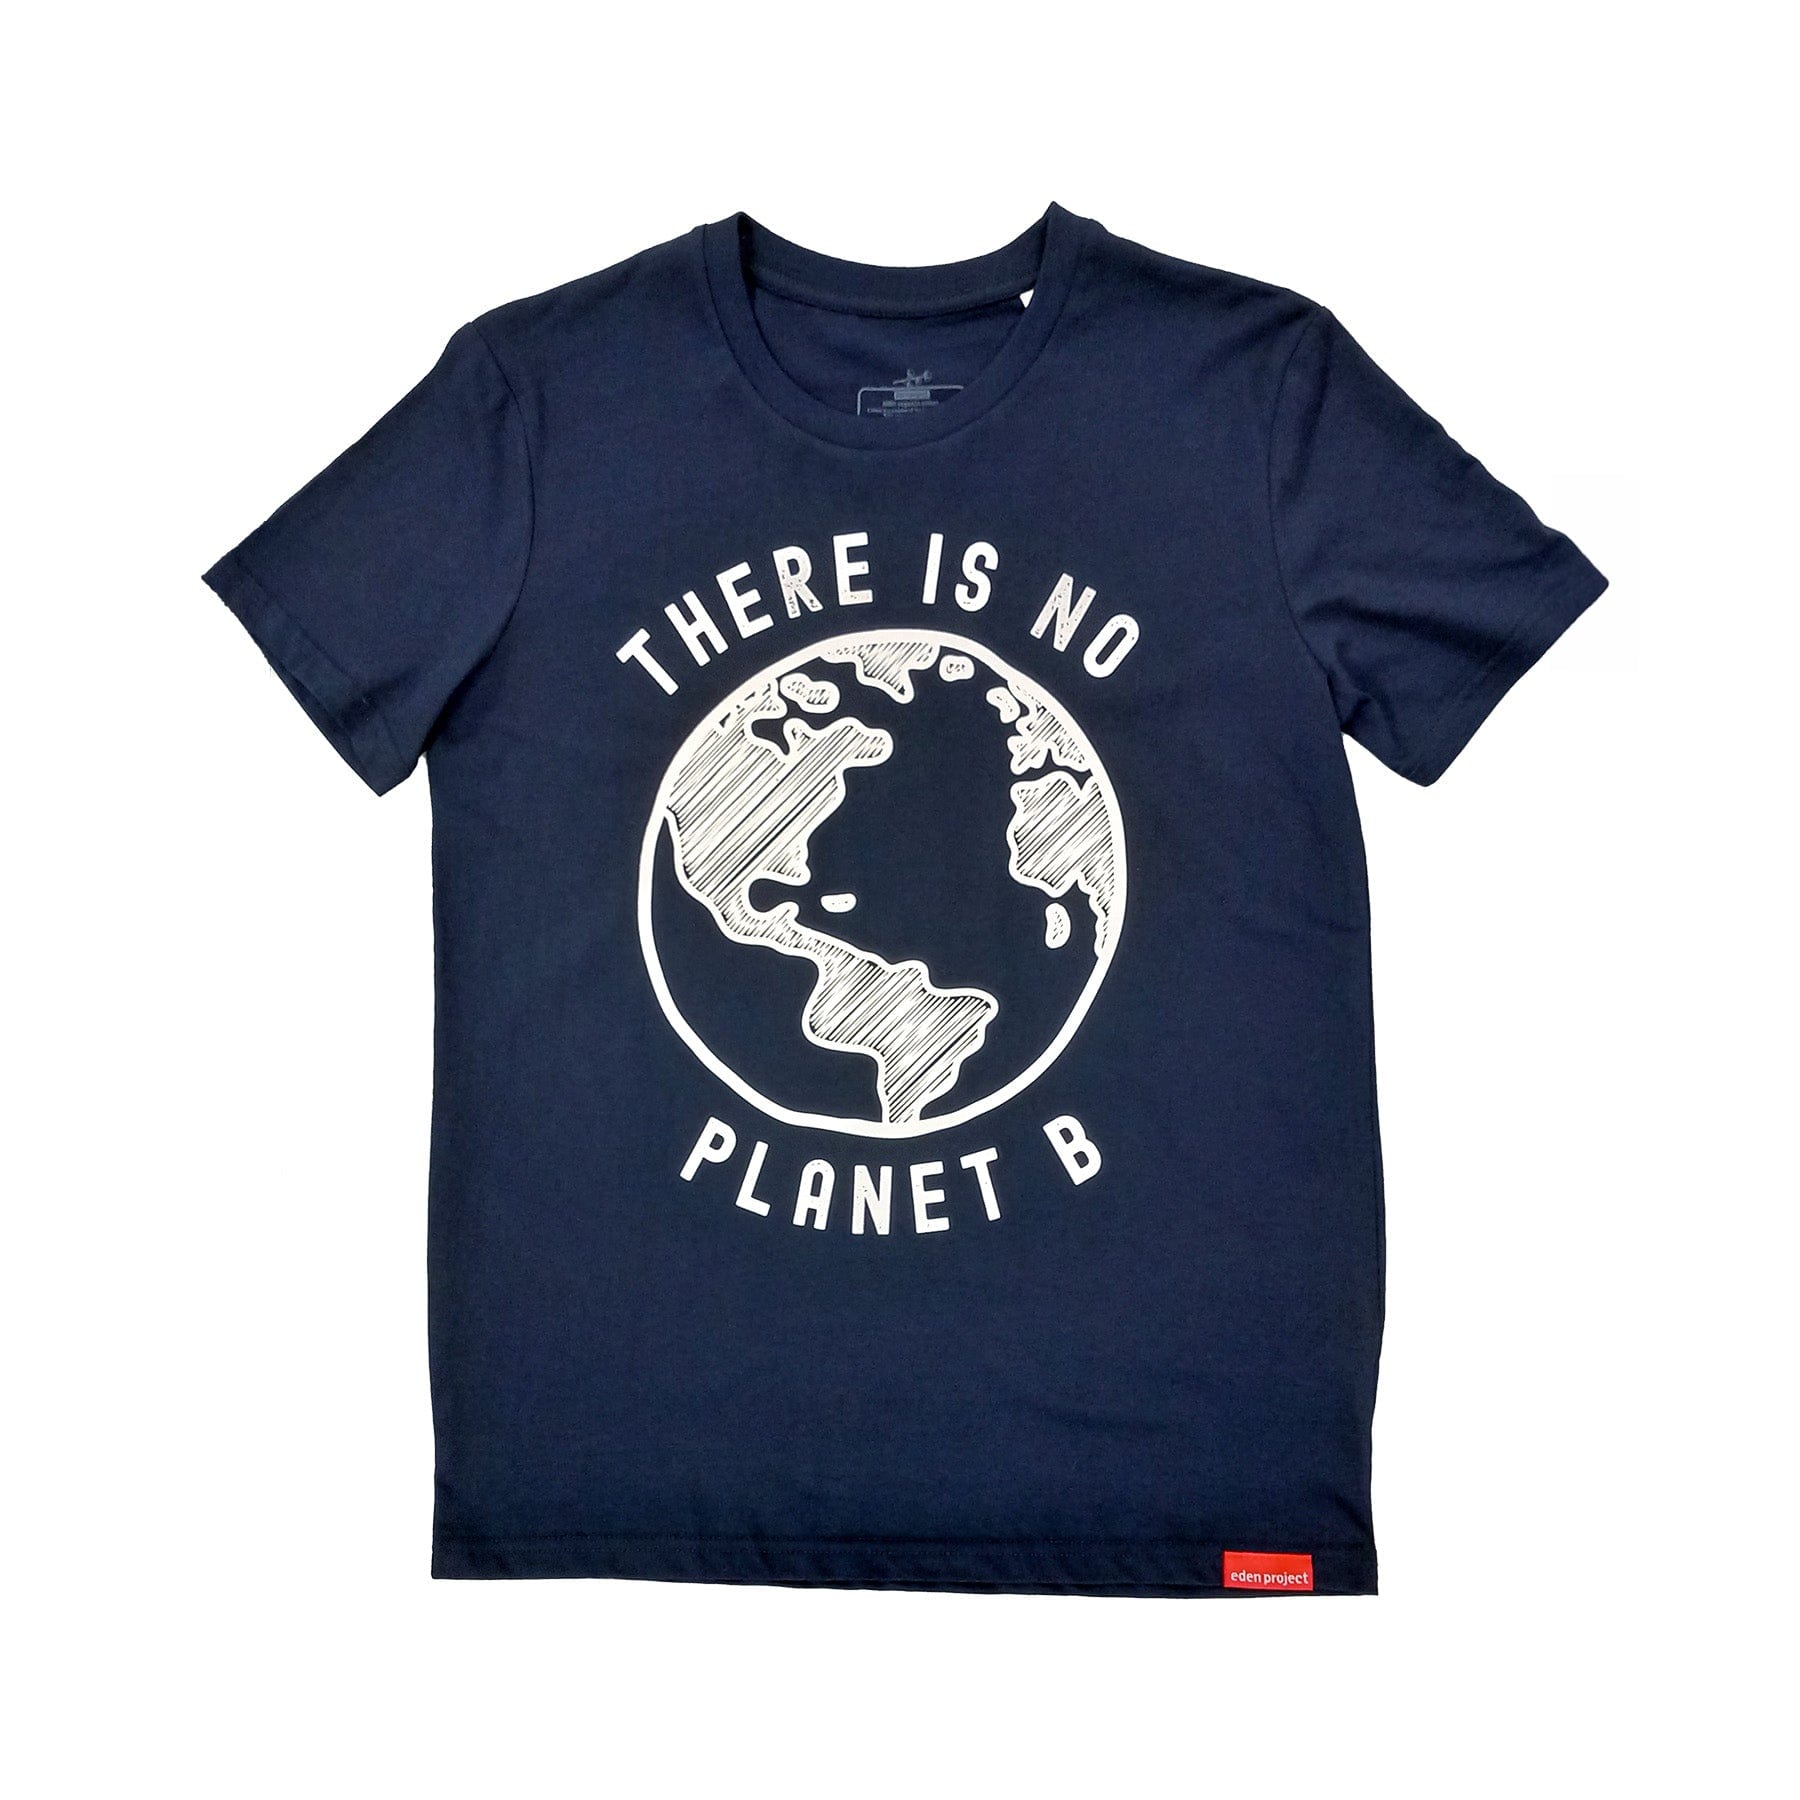 Men's planet b t-shirt